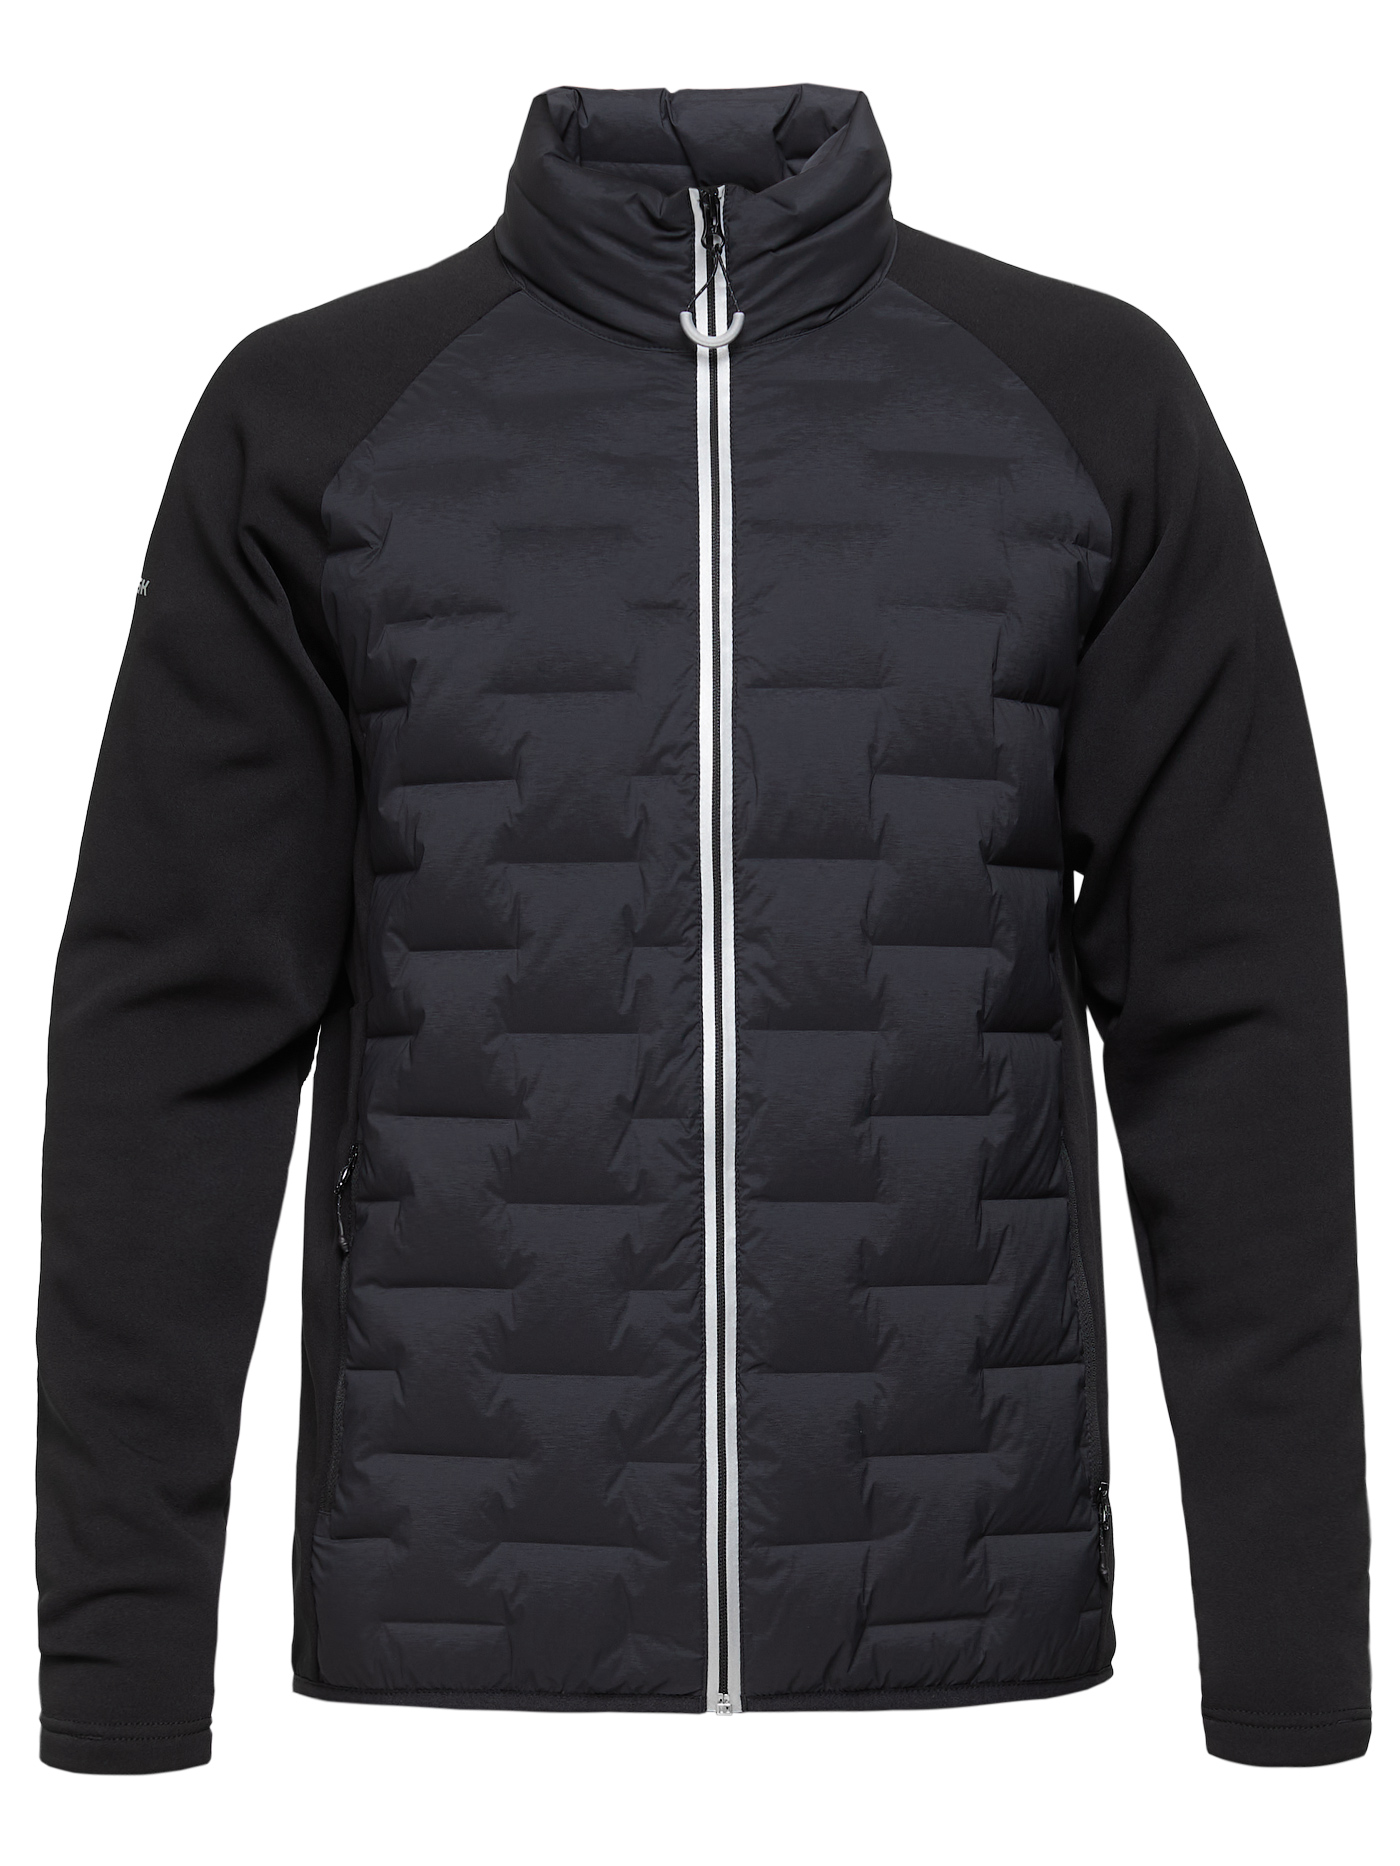 Куртка BASK, размер 50, цвет черный 19031-9009-050 Chamonix light hybrid v2 - фото 9